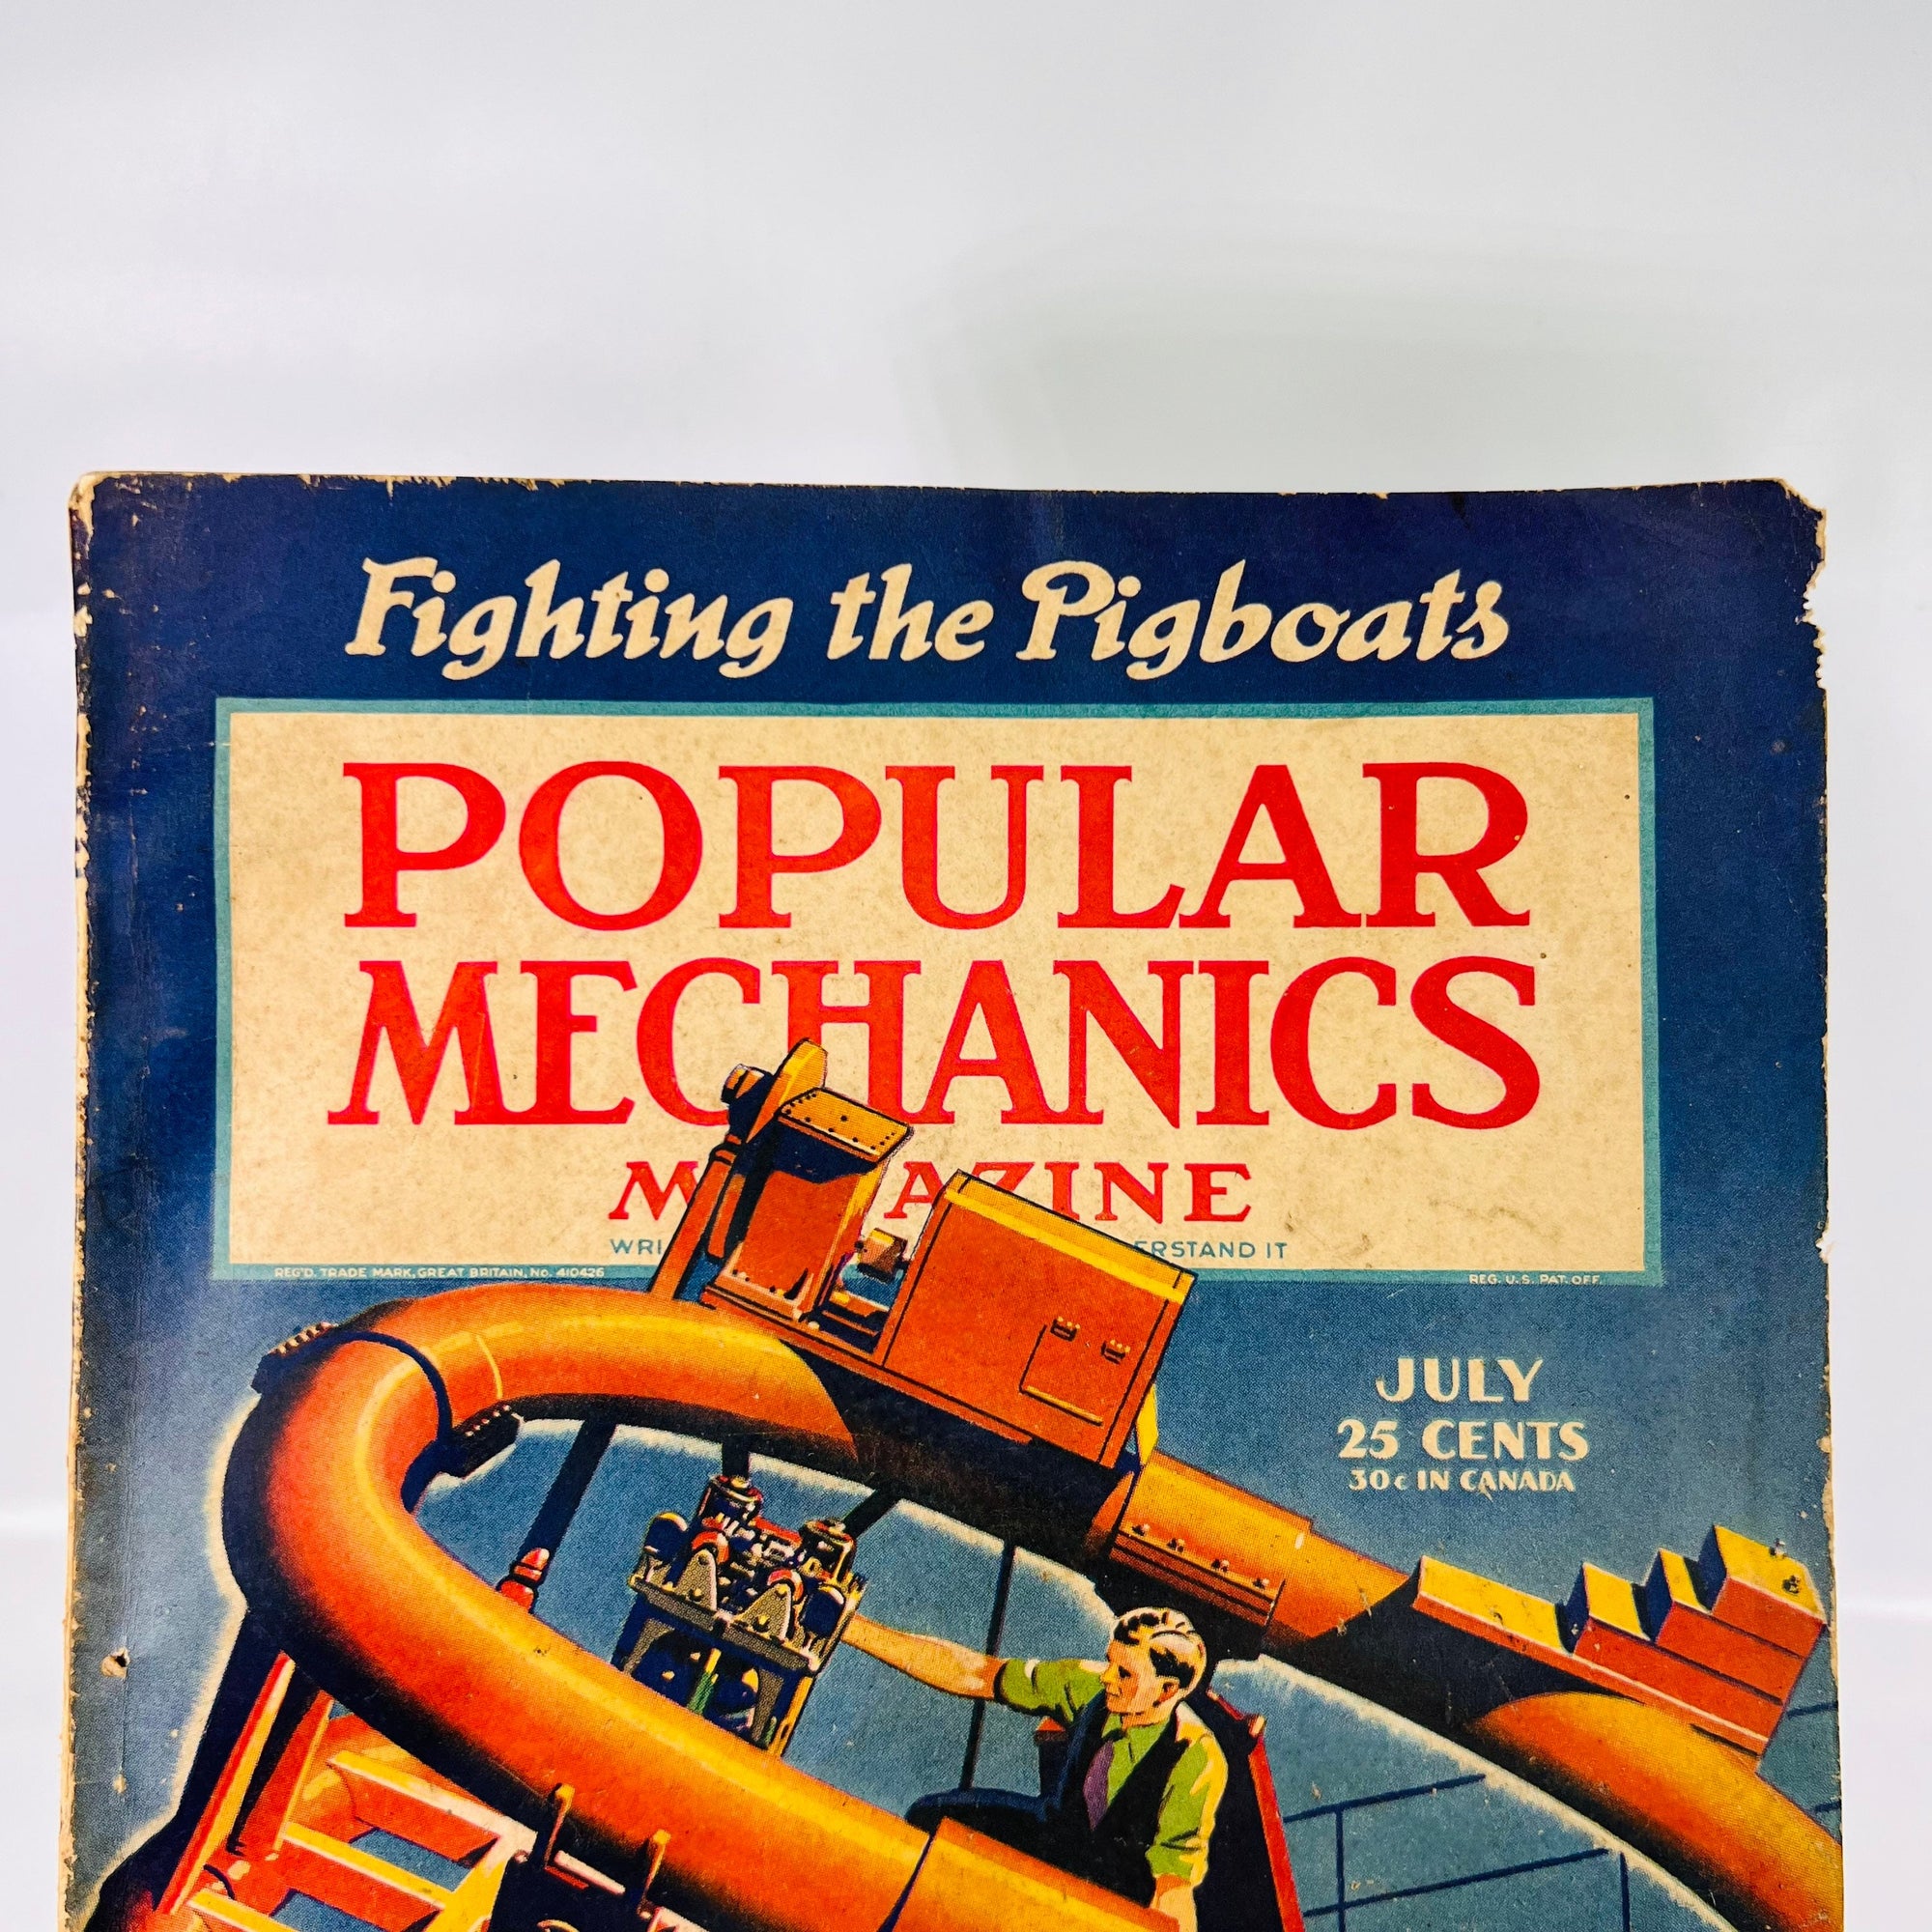 Popular Mechanics Magazine July Vol 80 Num 1 1943 Published by Henry H Windsor Cover: Sea Sickness Machine Vintage War Articles Advertising